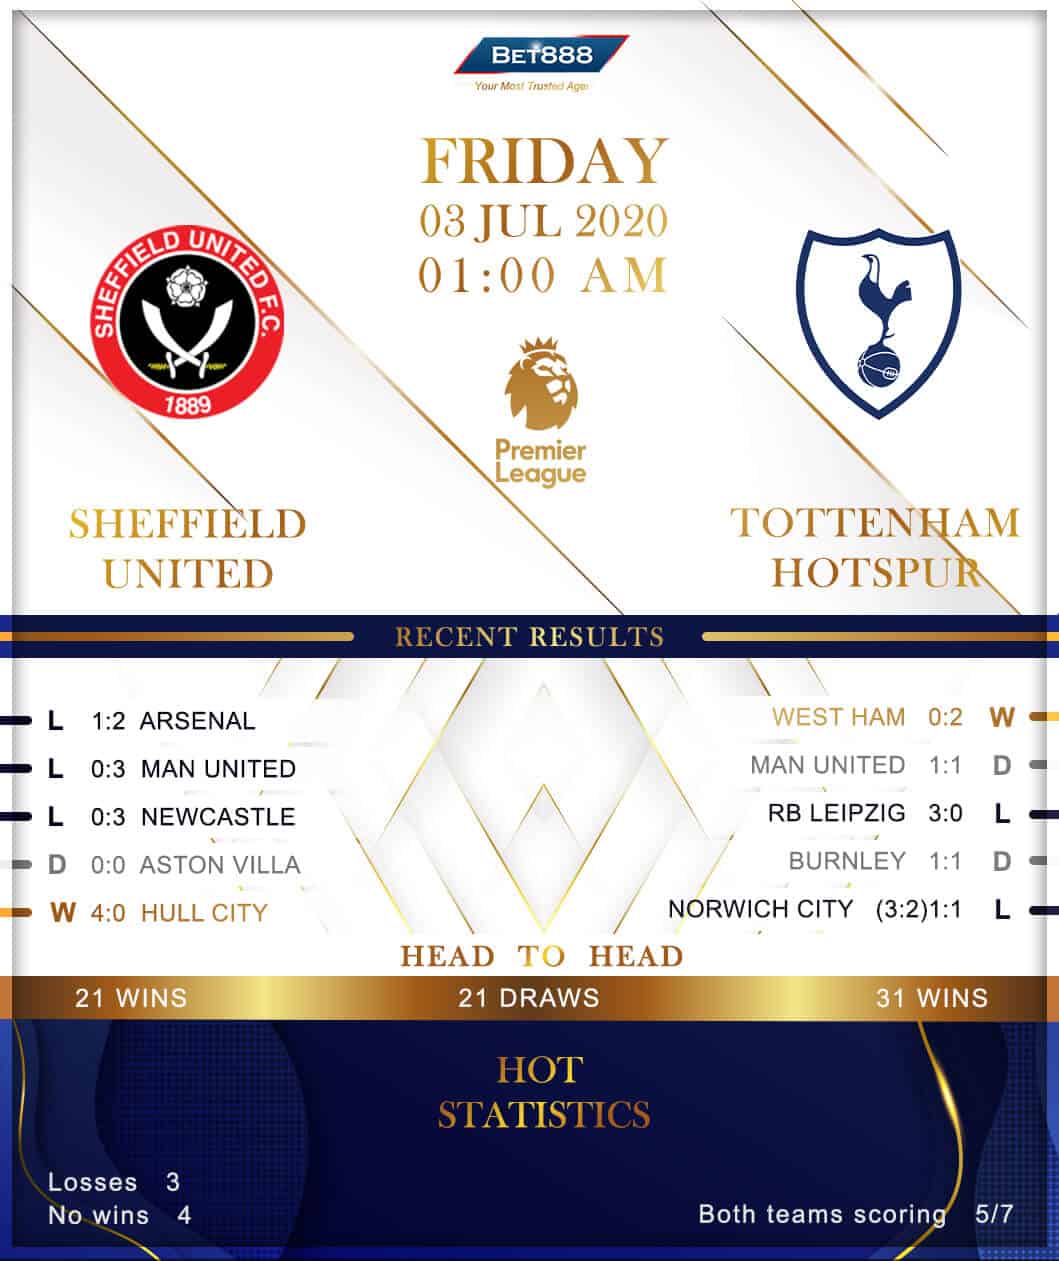 Sheffield United vs Tottenham Hotspur 03/07/20